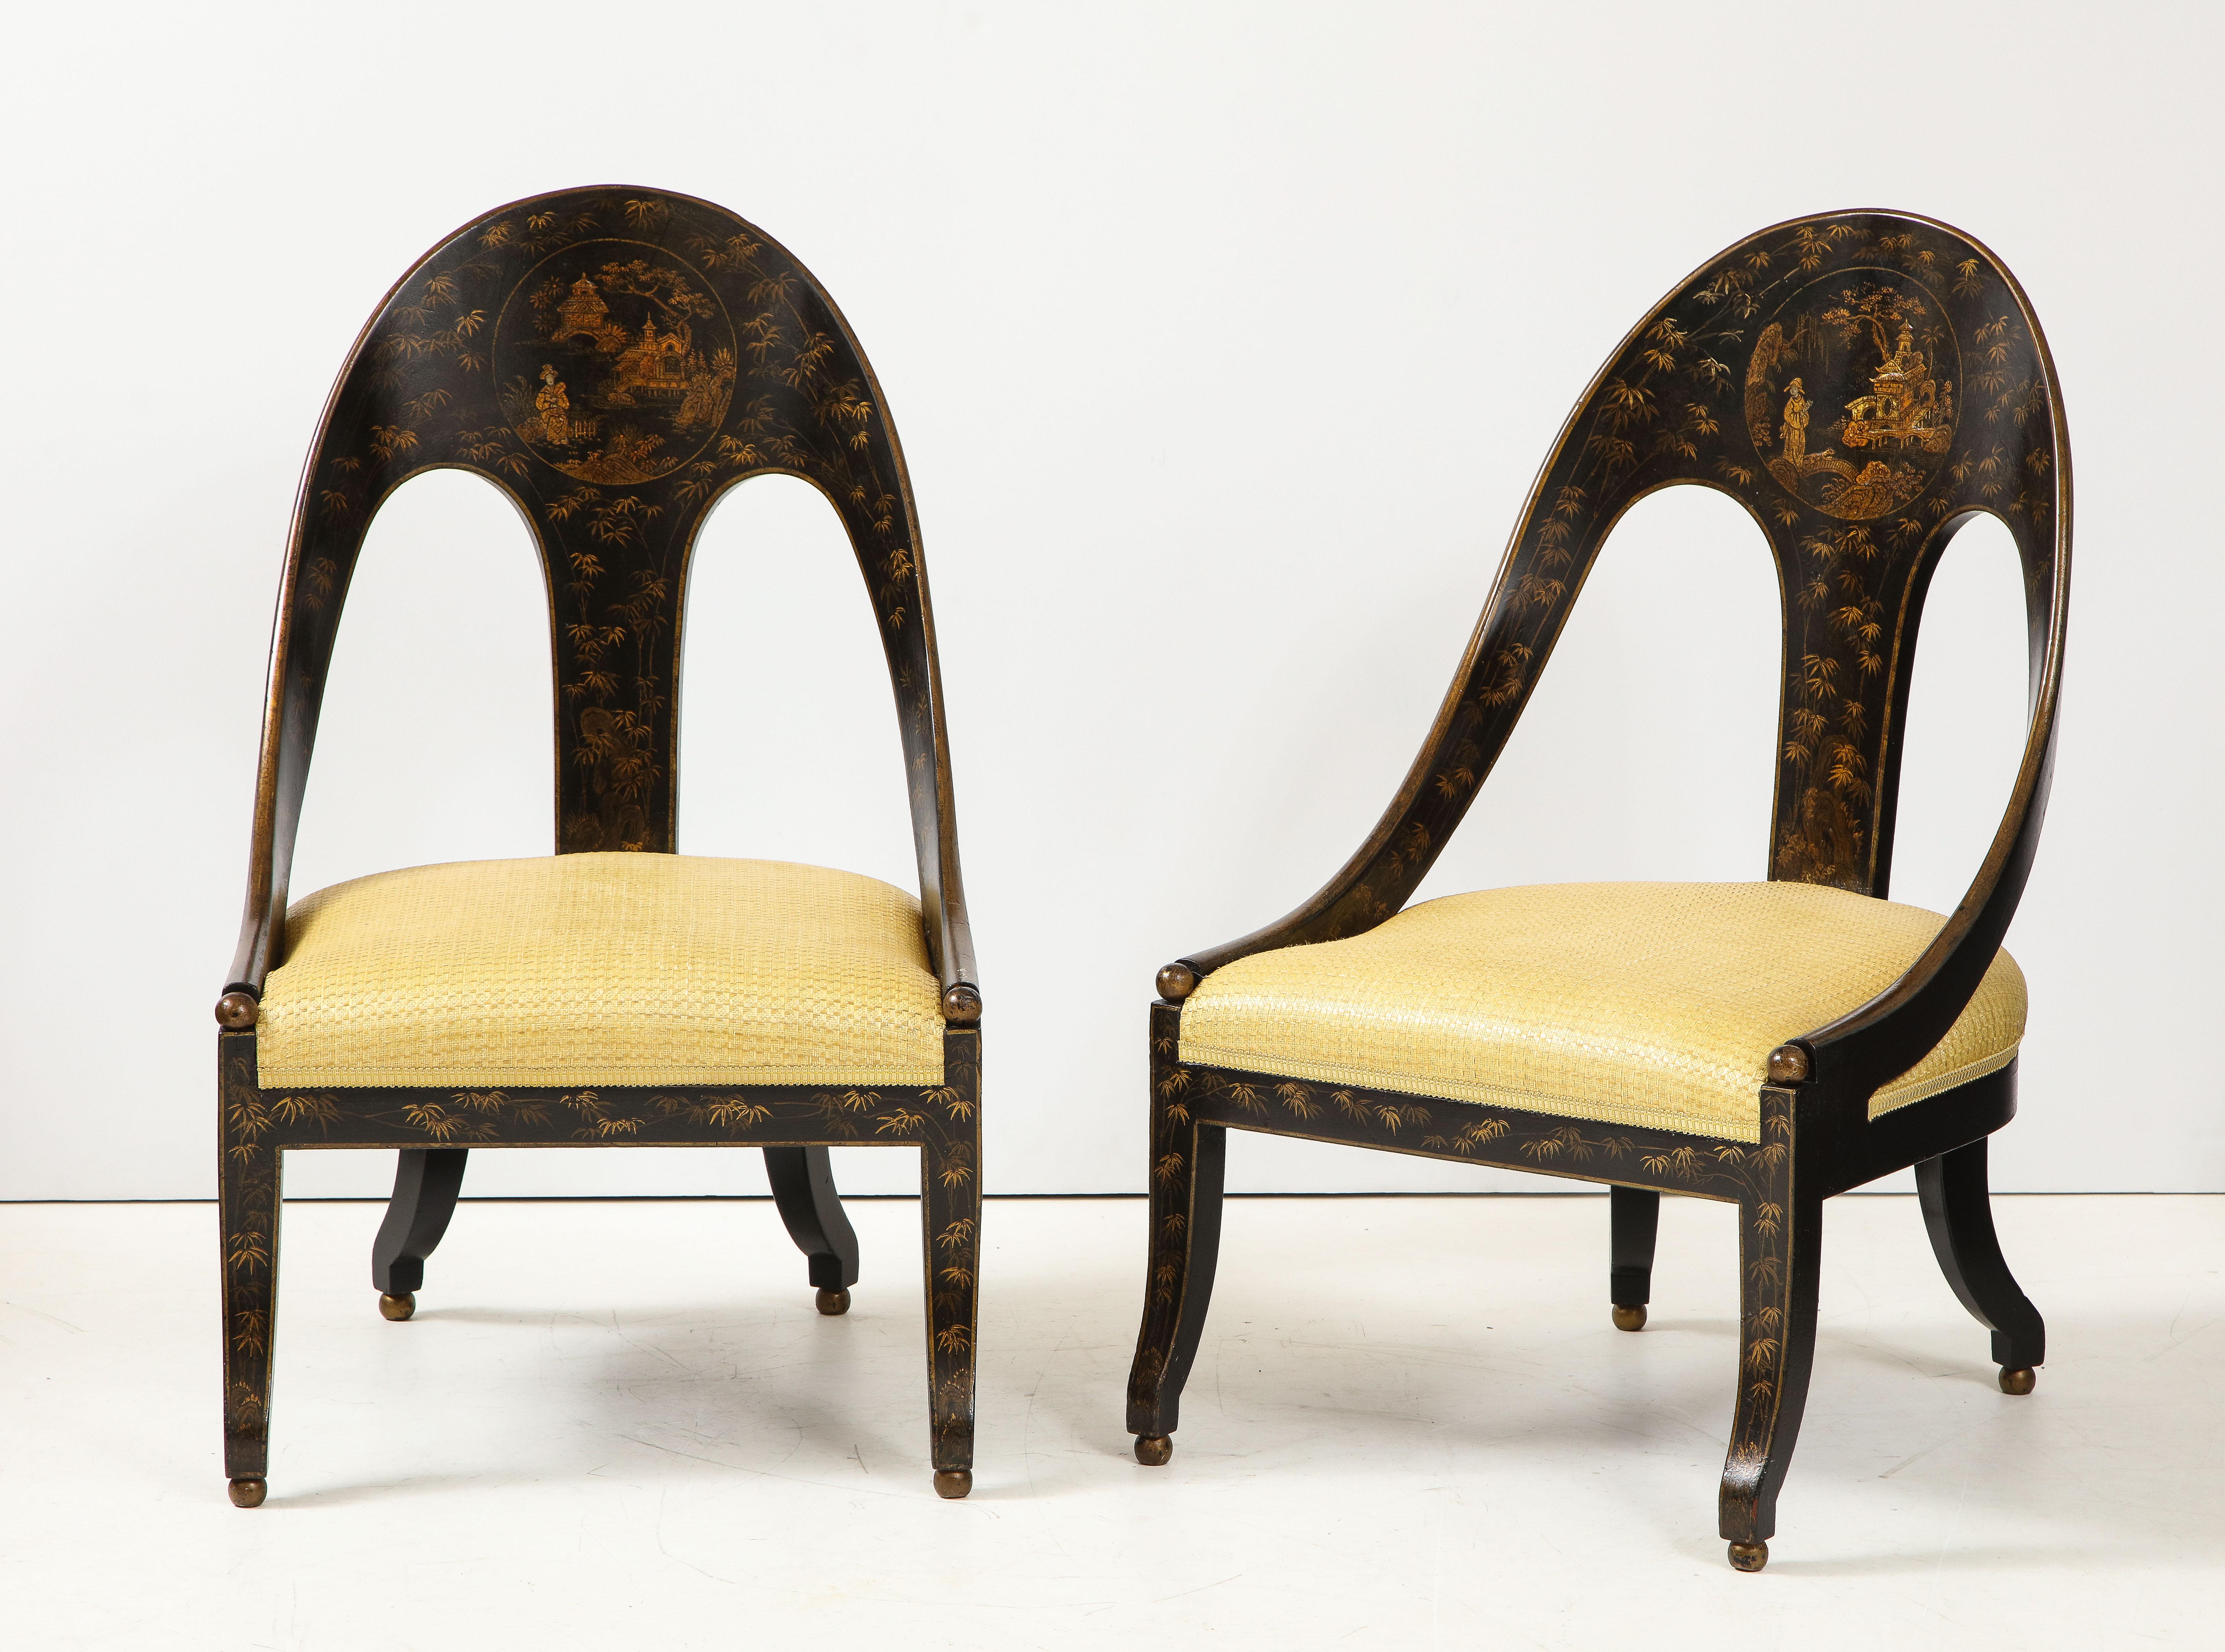 Japanned Pair of Regency Style Spoon Chairs